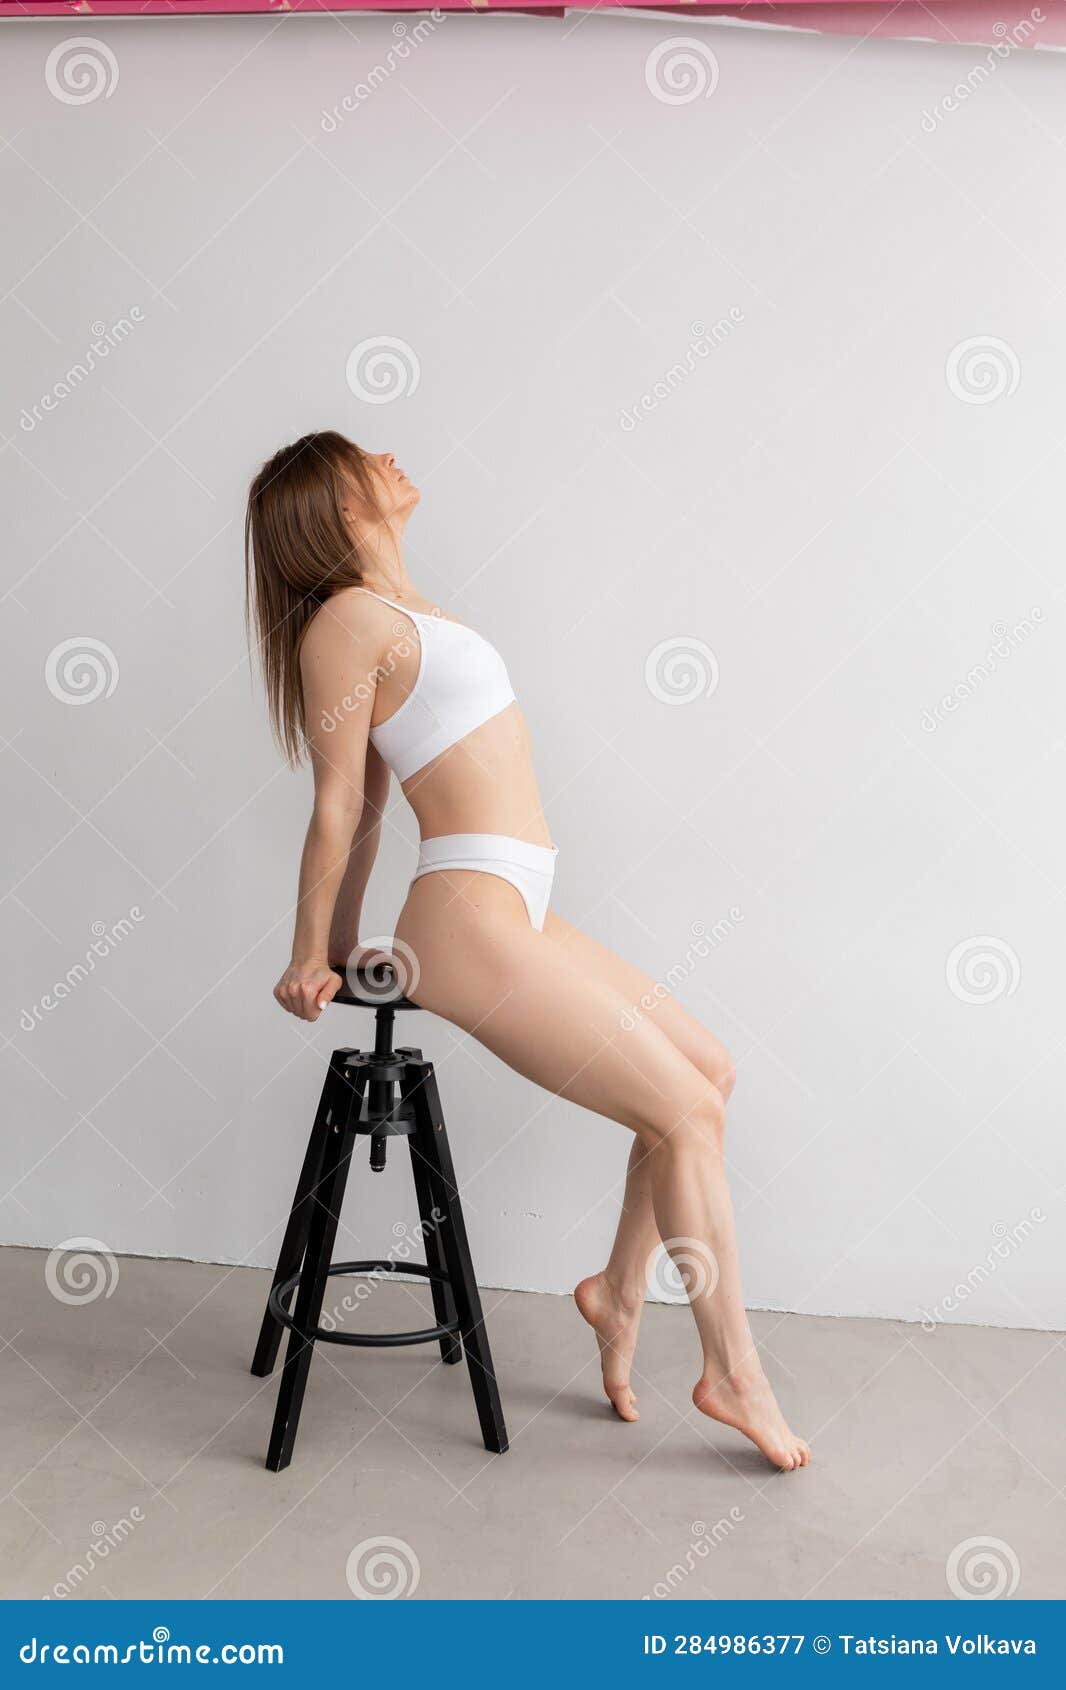 https://thumbs.dreamstime.com/z/side-view-young-beautiful-slim-woman-wearing-white-seamless-underwear-bra-thongs-sitting-black-stool-holding-top-stool-284986377.jpg